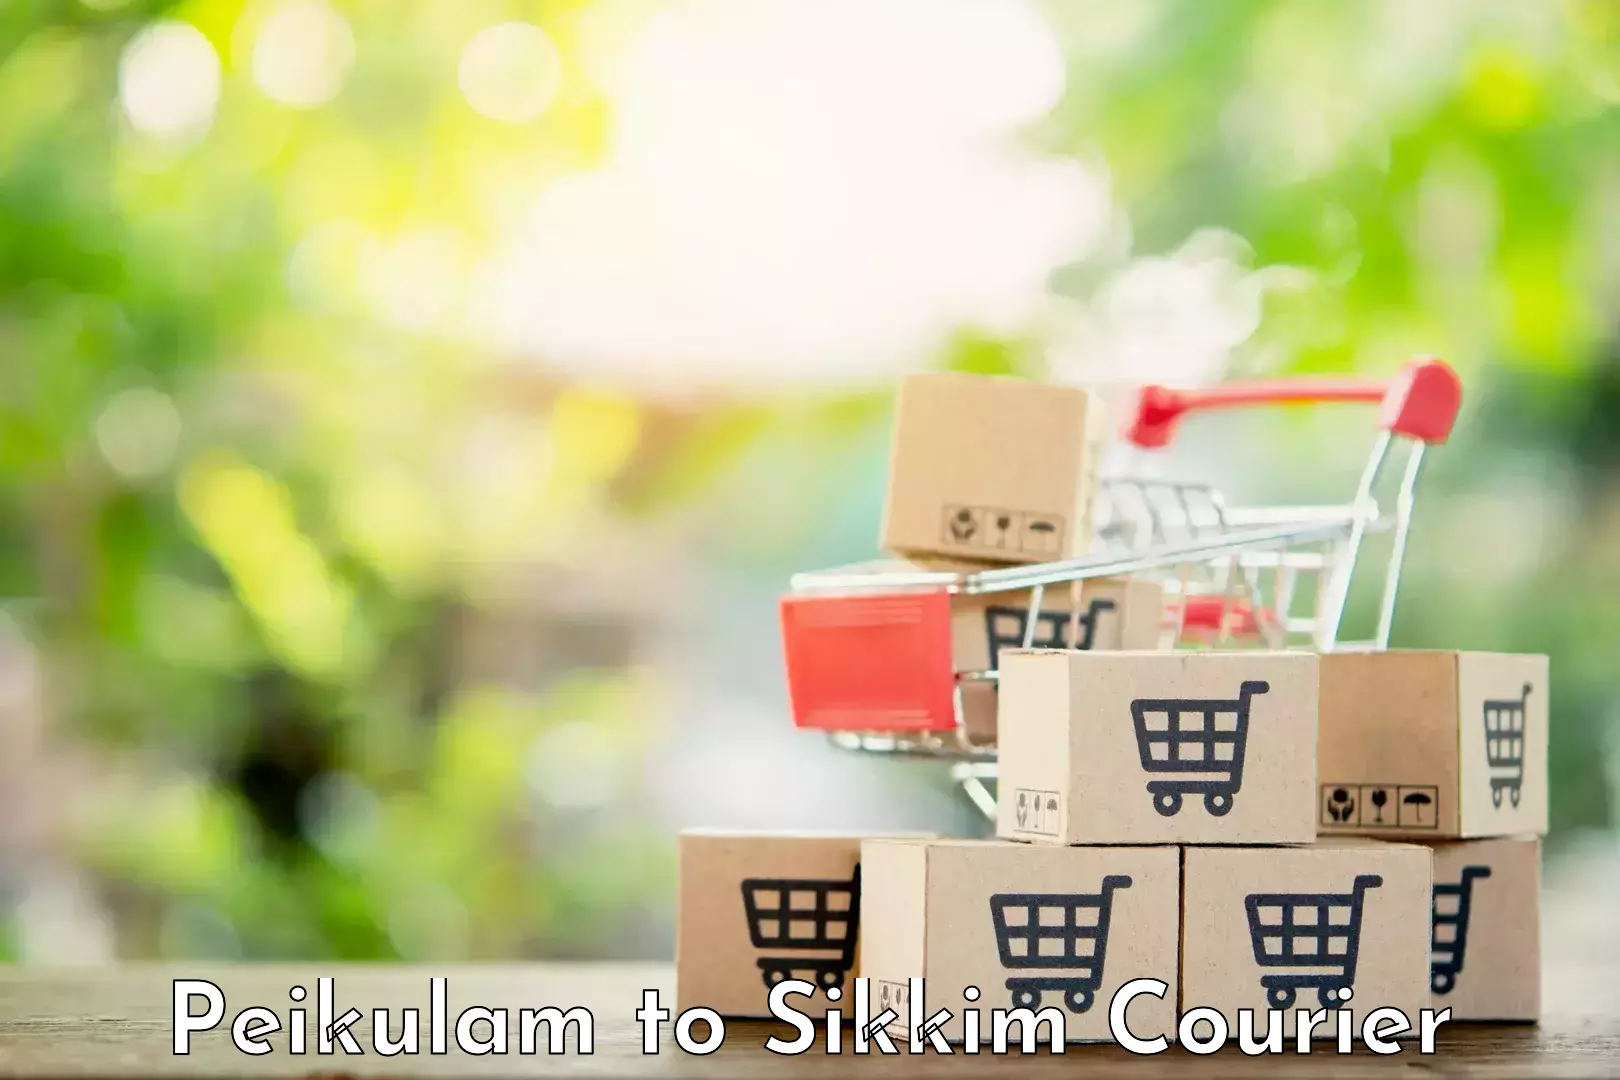 Bulk shipping discounts Peikulam to Pelling